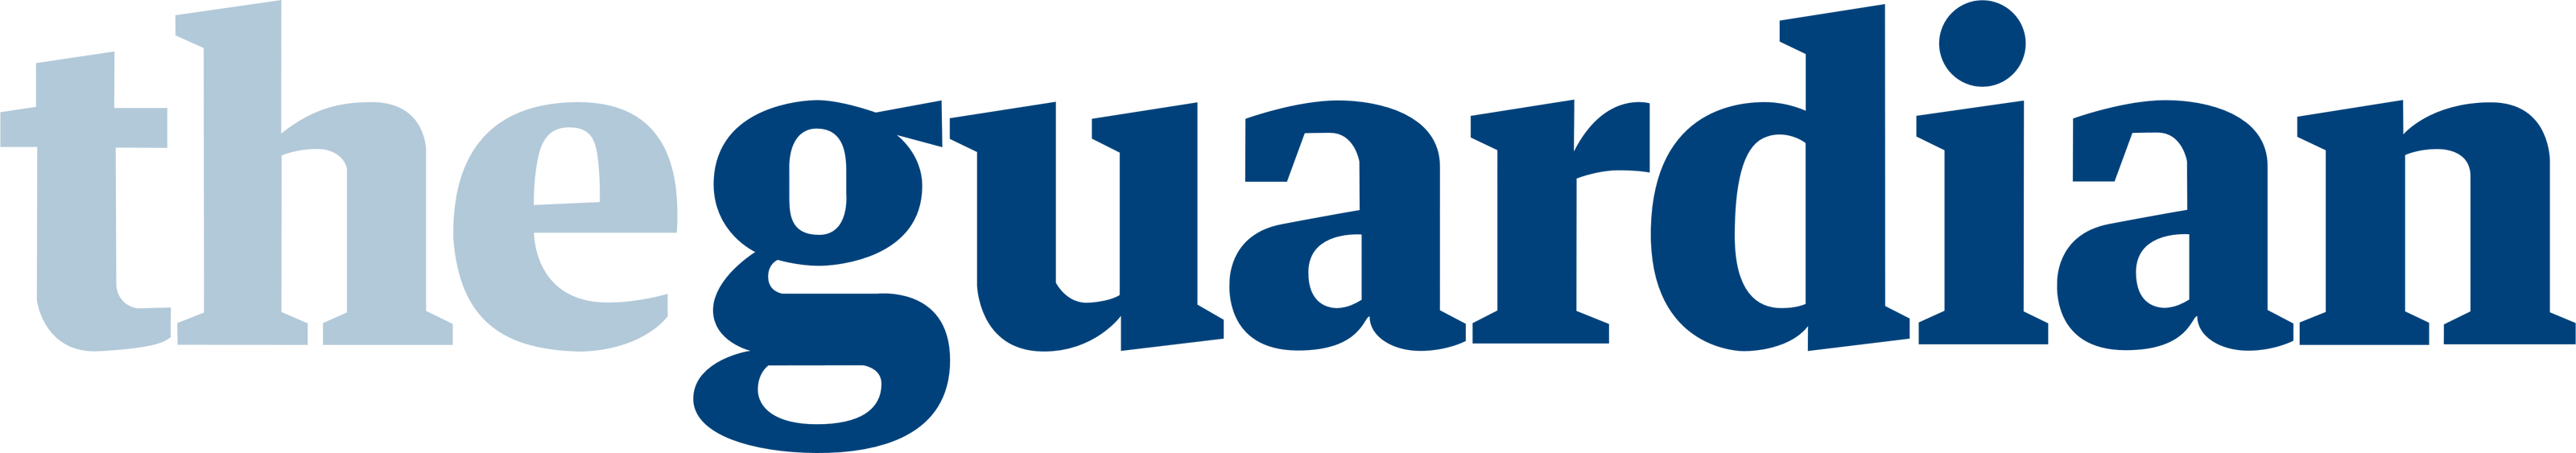 the guardian newspaper logo